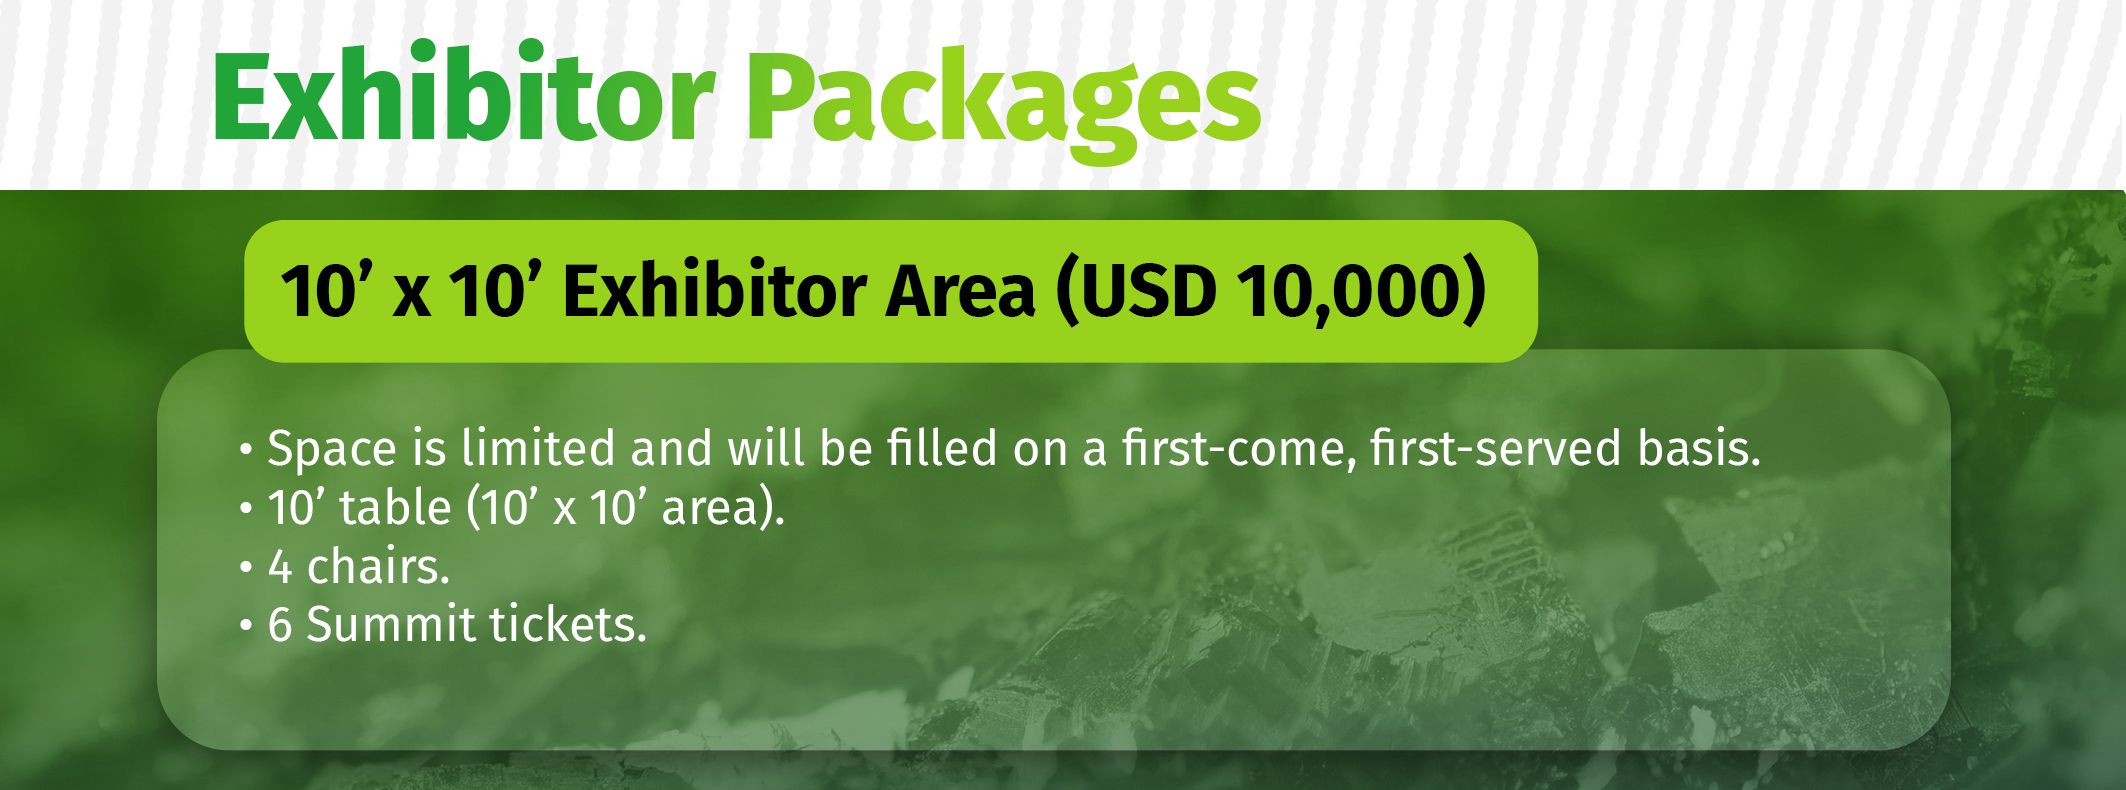 10’ x 10’ Exhibitor Area (USD 10,000)